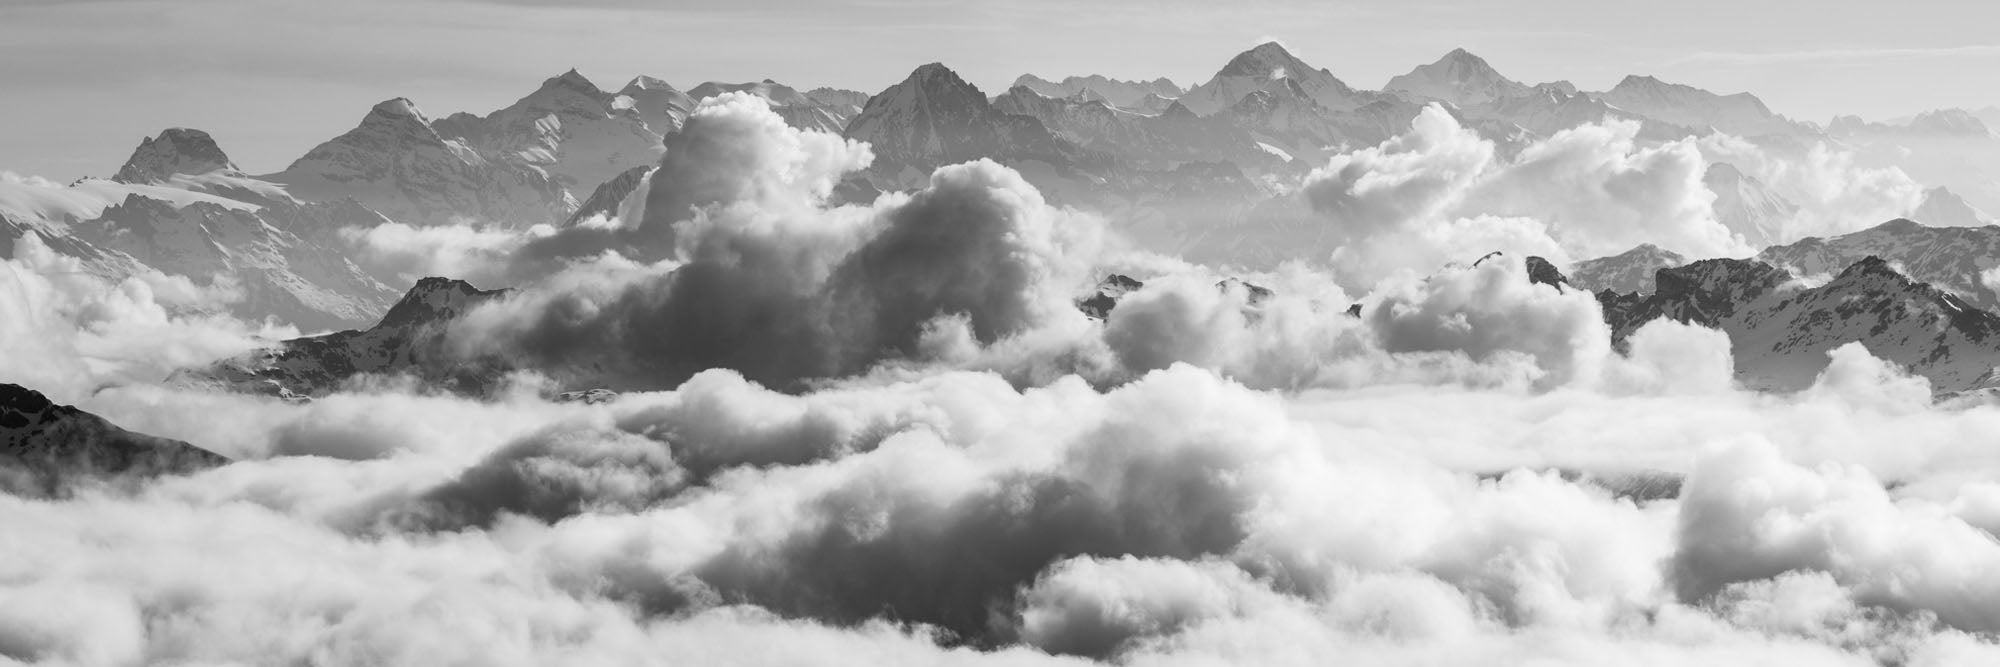 Bernese Alps, Panorama, Switzerland No 2 - Petra Gut Contemporary AG Thomas Crauwels